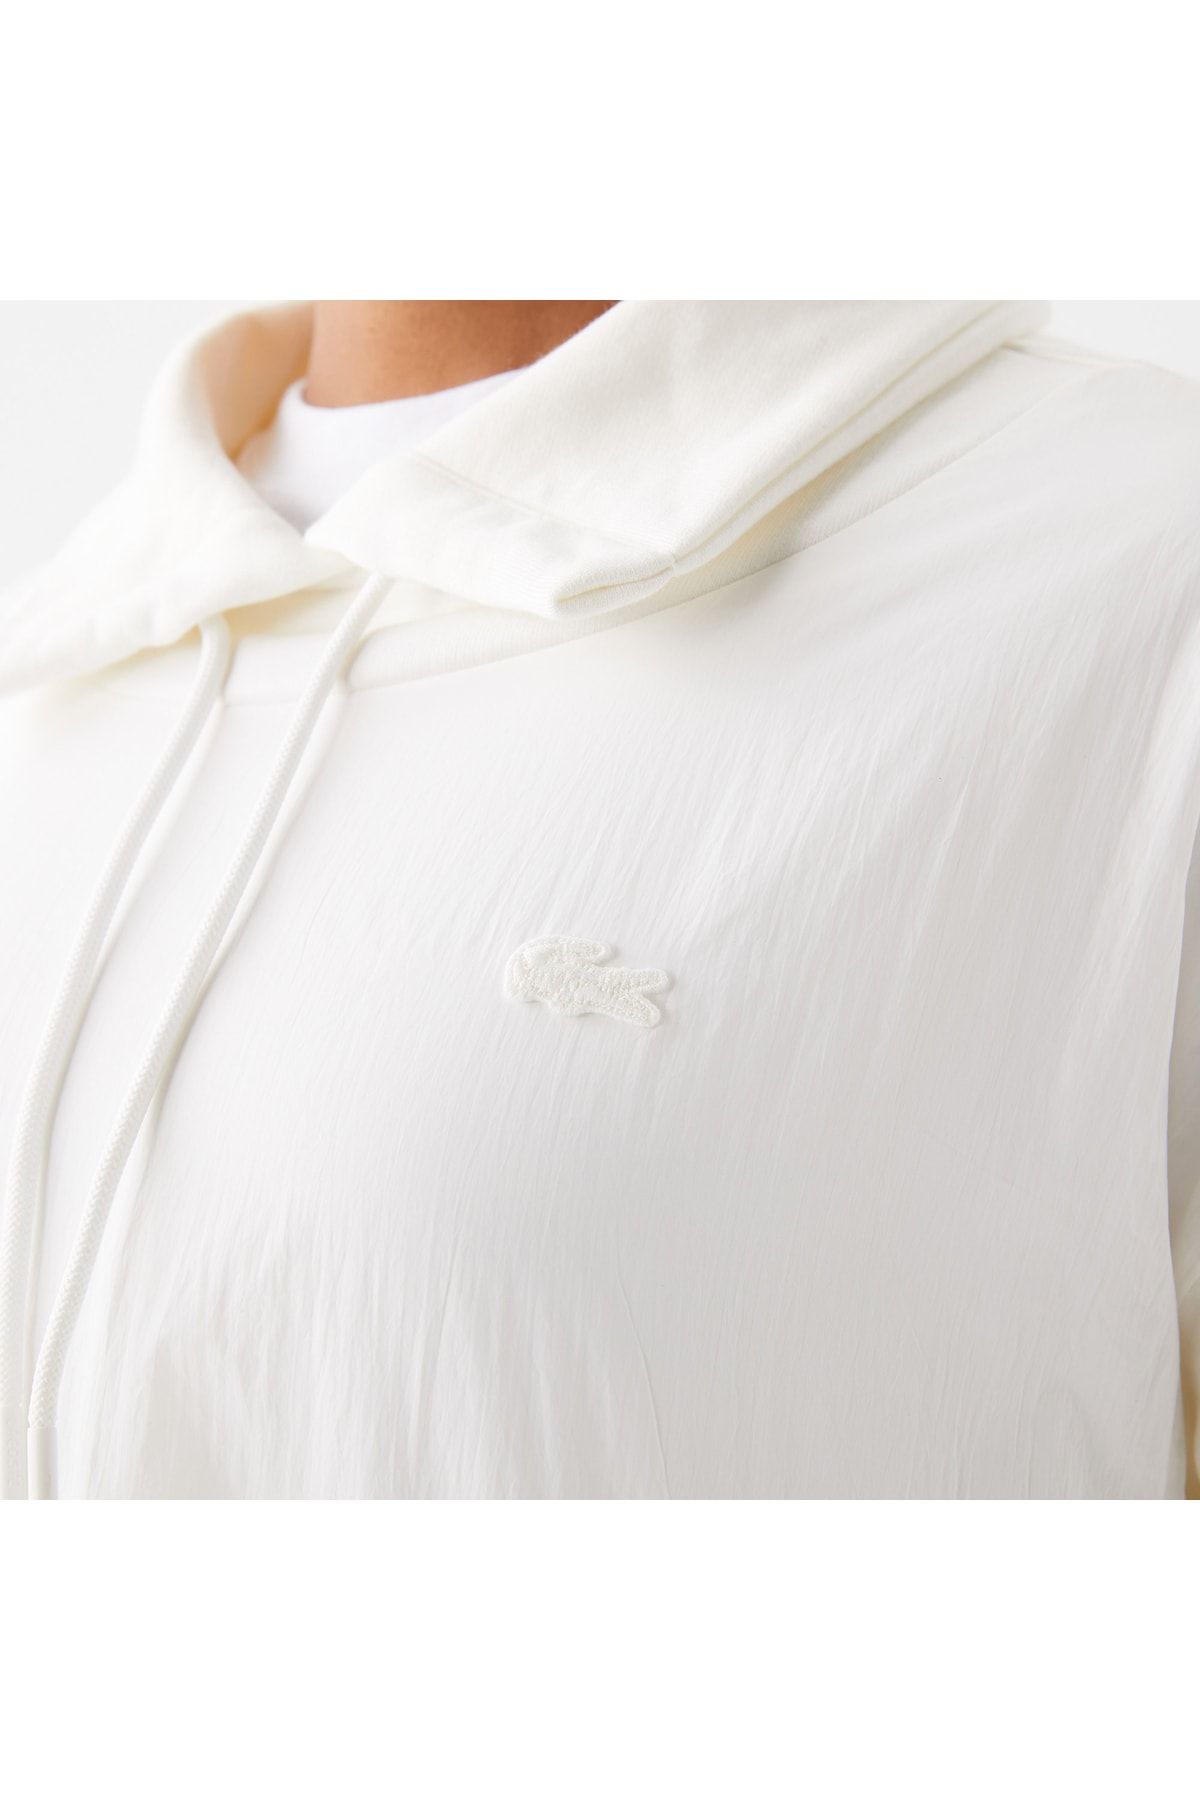 Lacoste زن به طور منظم مناسب زنانه یقه سفید پیراهن